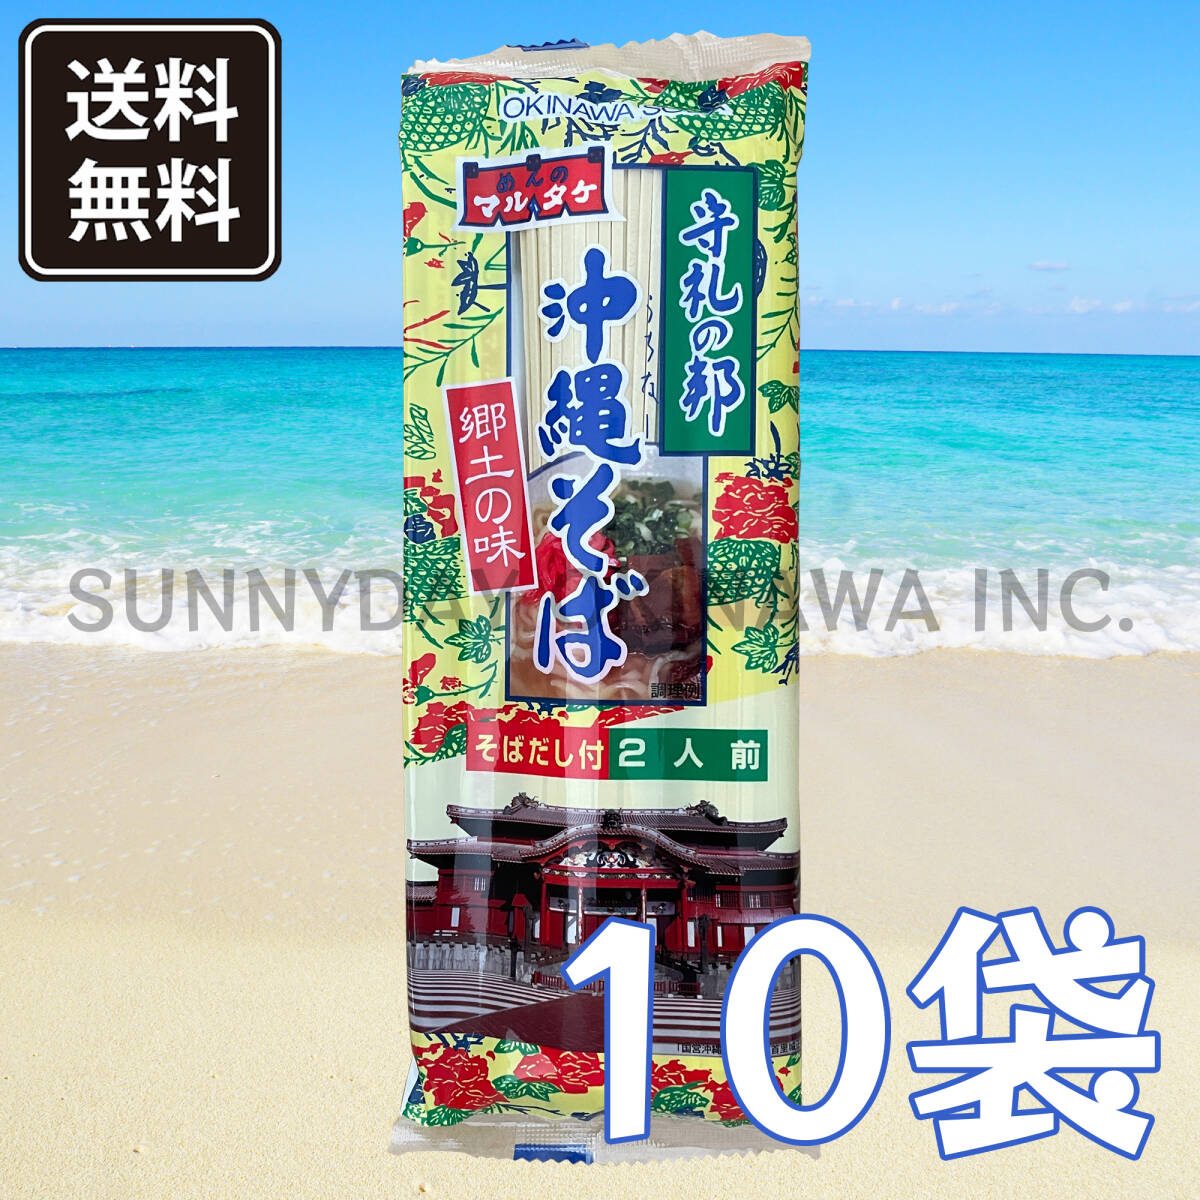  Okinawa соба . лапша (2 порции ) 10 пакет 20 порции соба суп имеется maru take еда . земля производство ваш заказ 